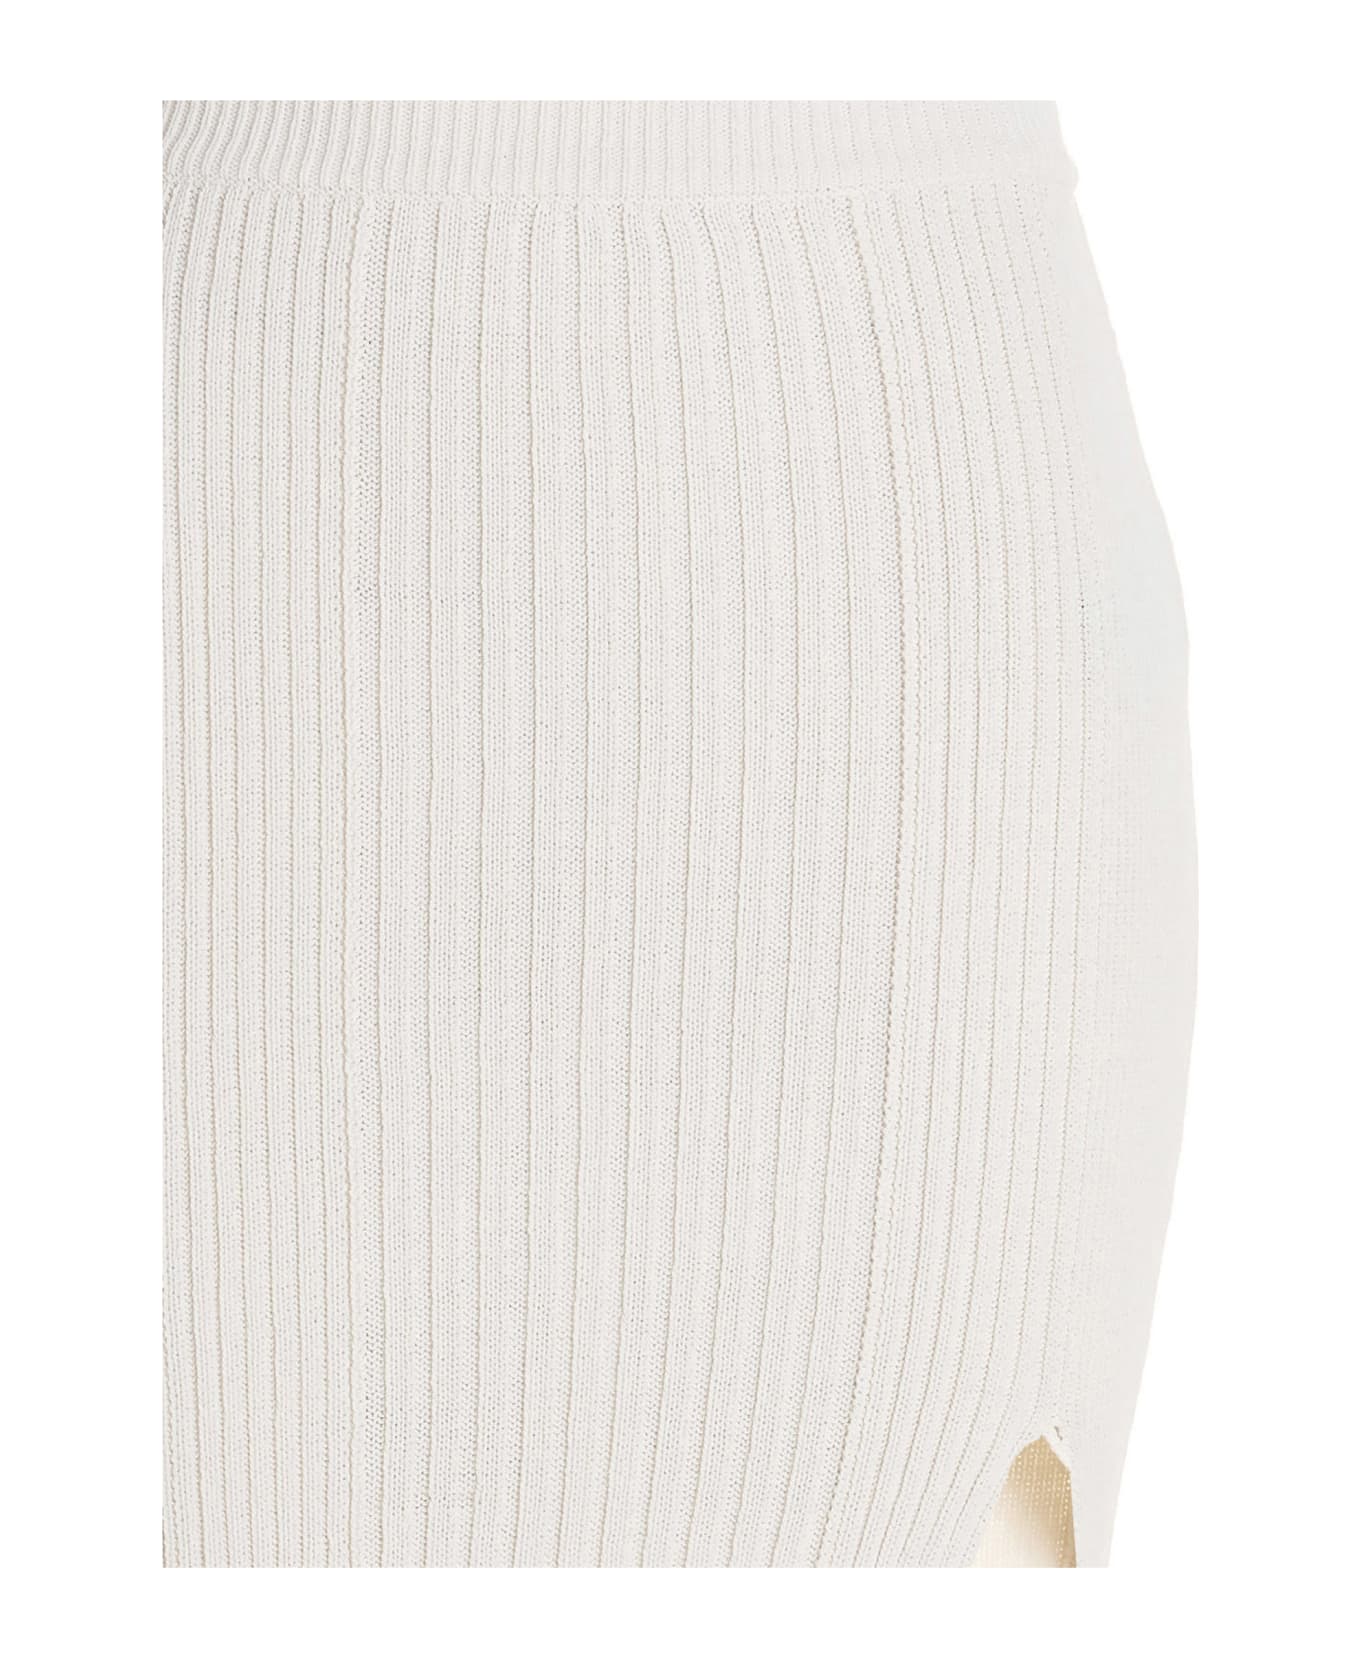 Balmain Midi Ribbed Skirt - White